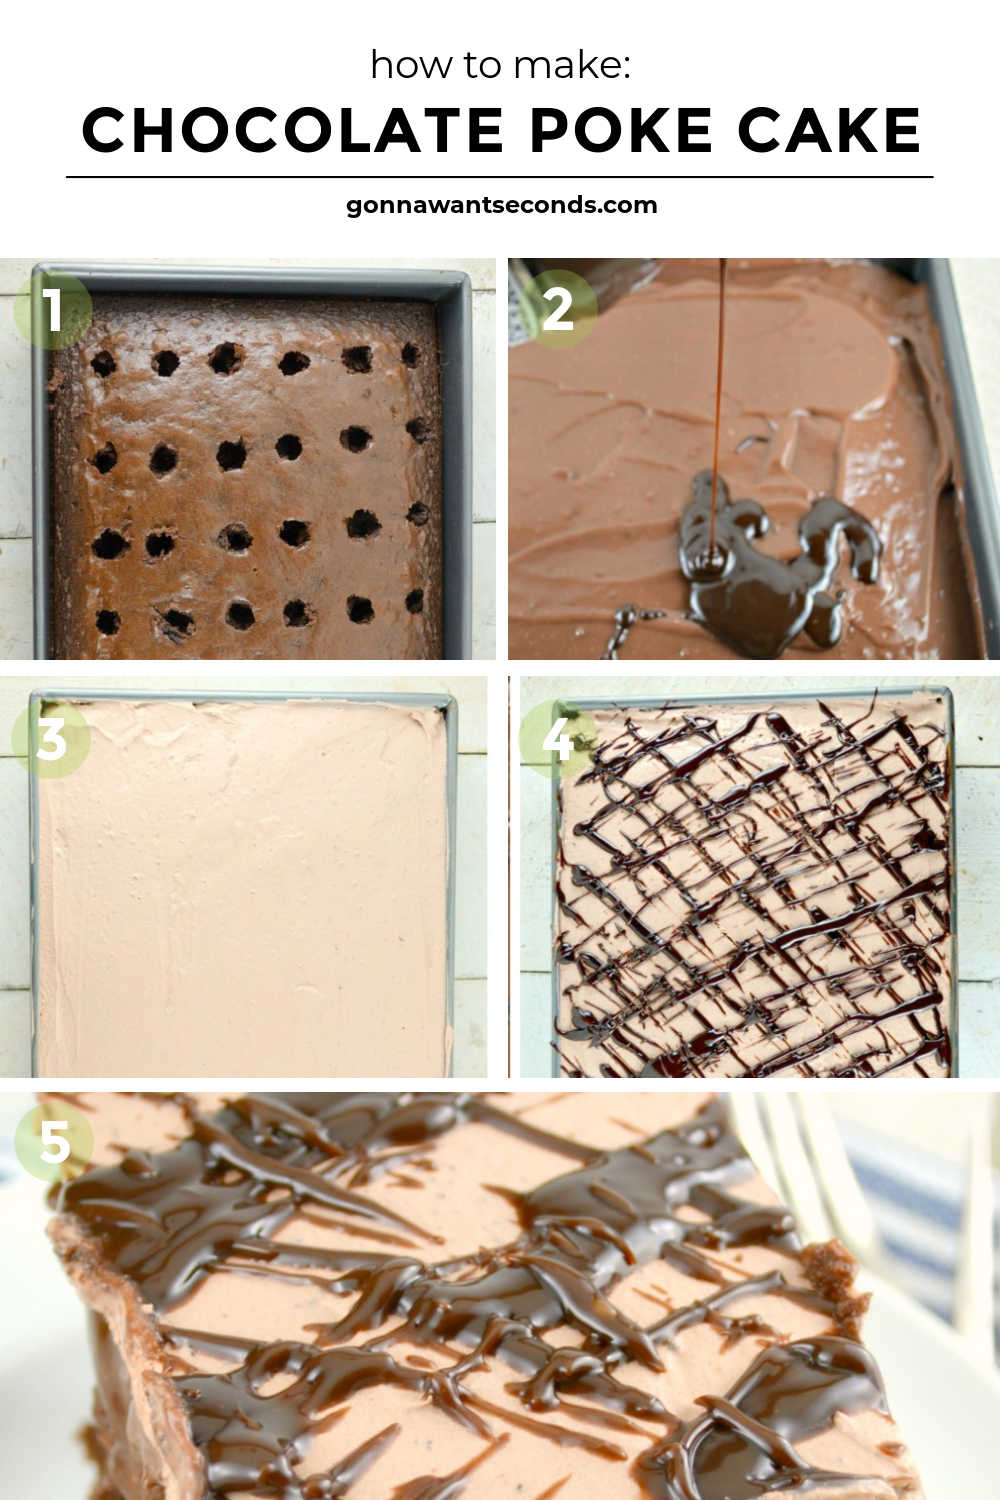 Step by step how to make chocolate poke cake